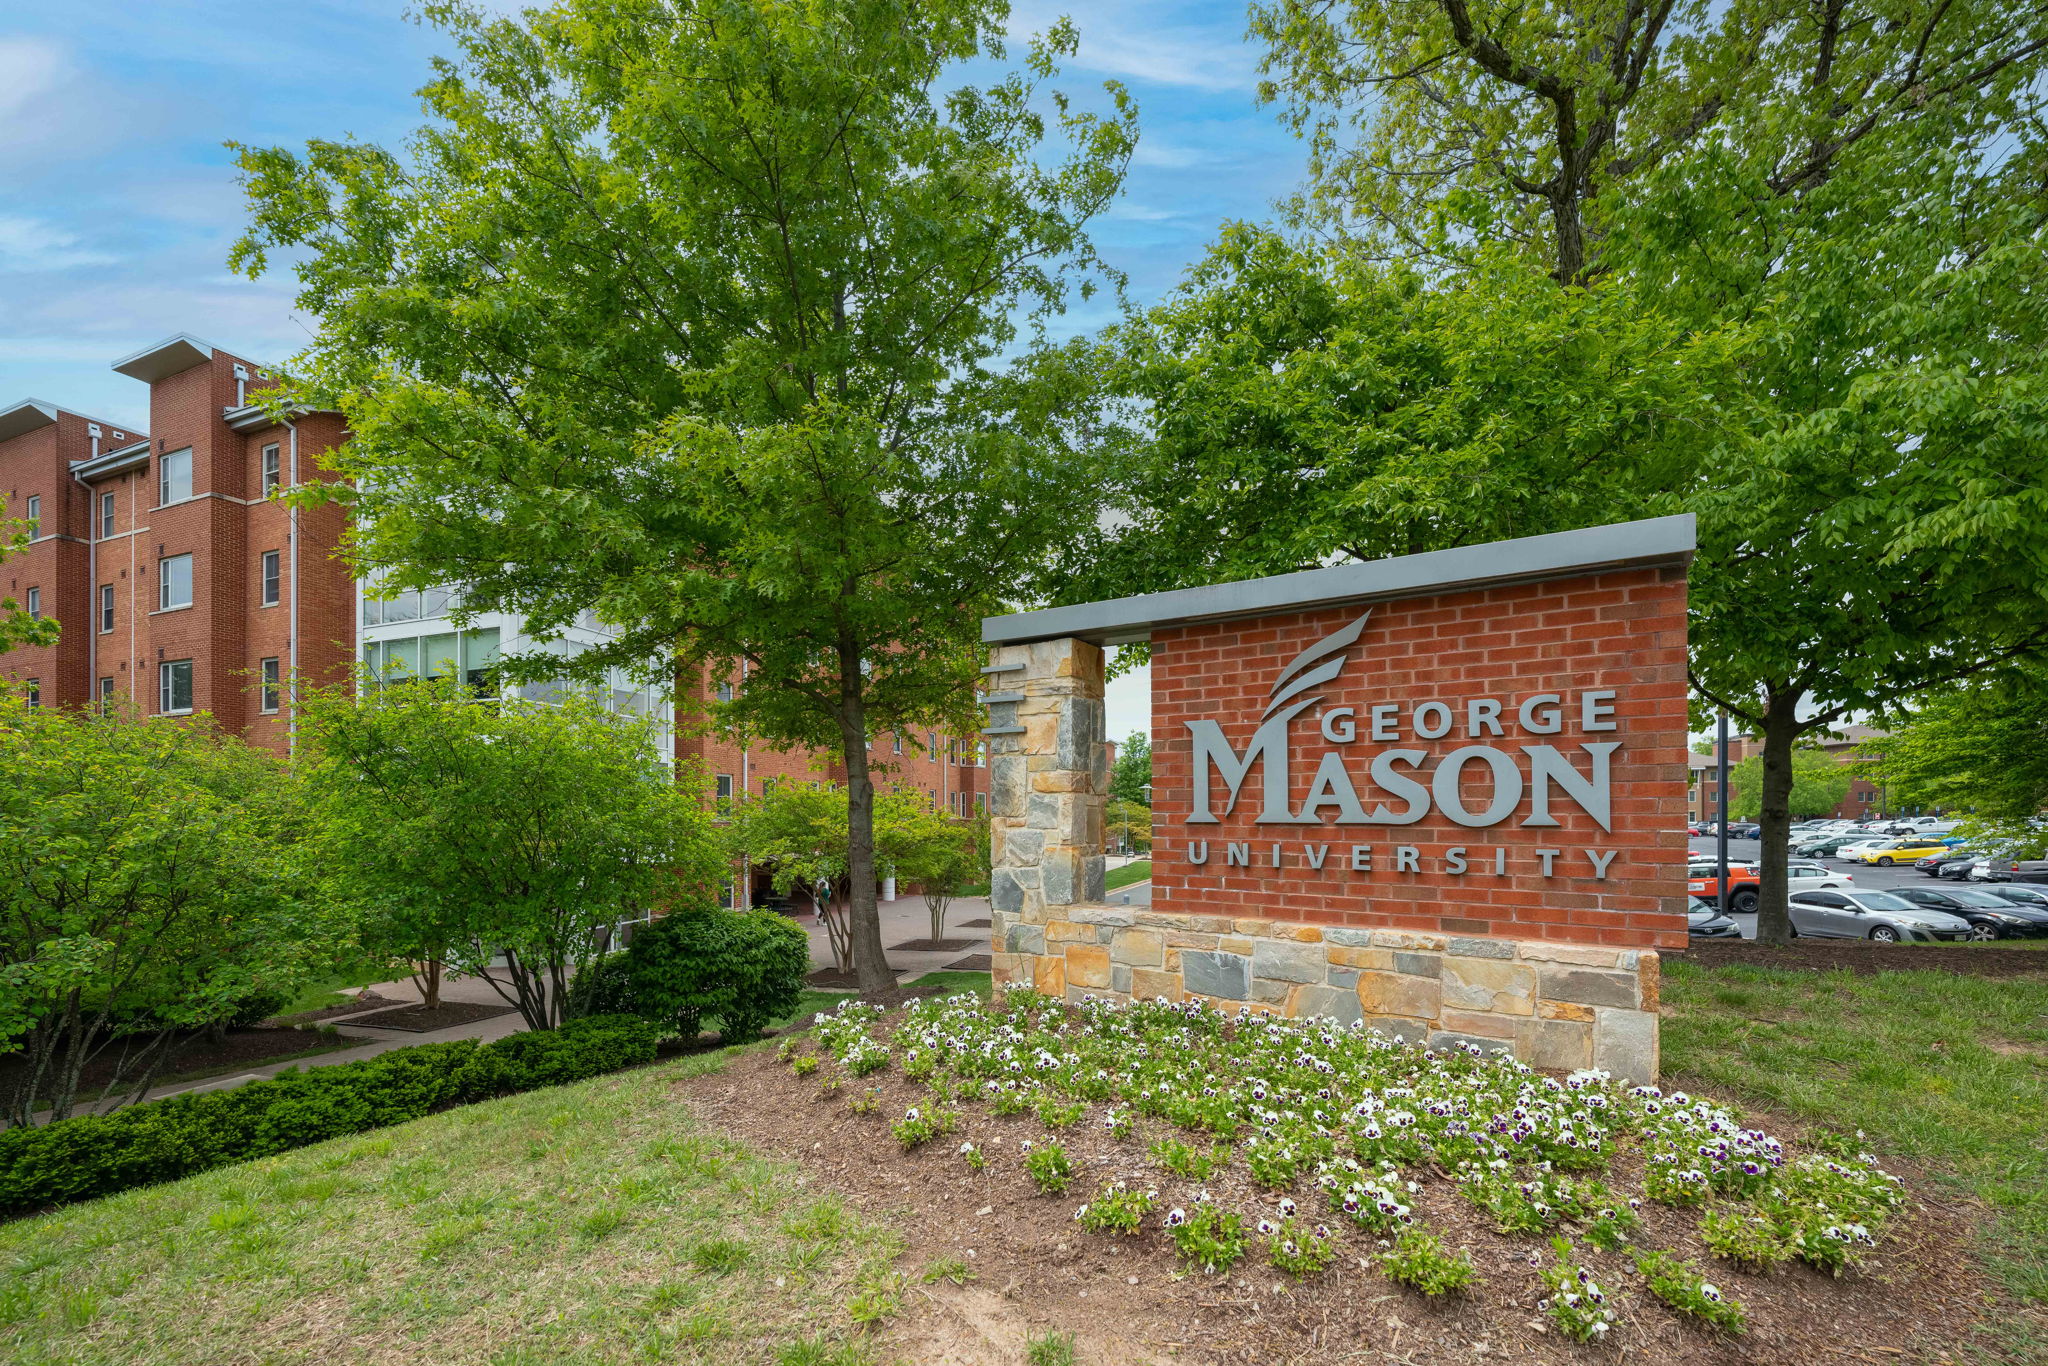 Near George Mason University